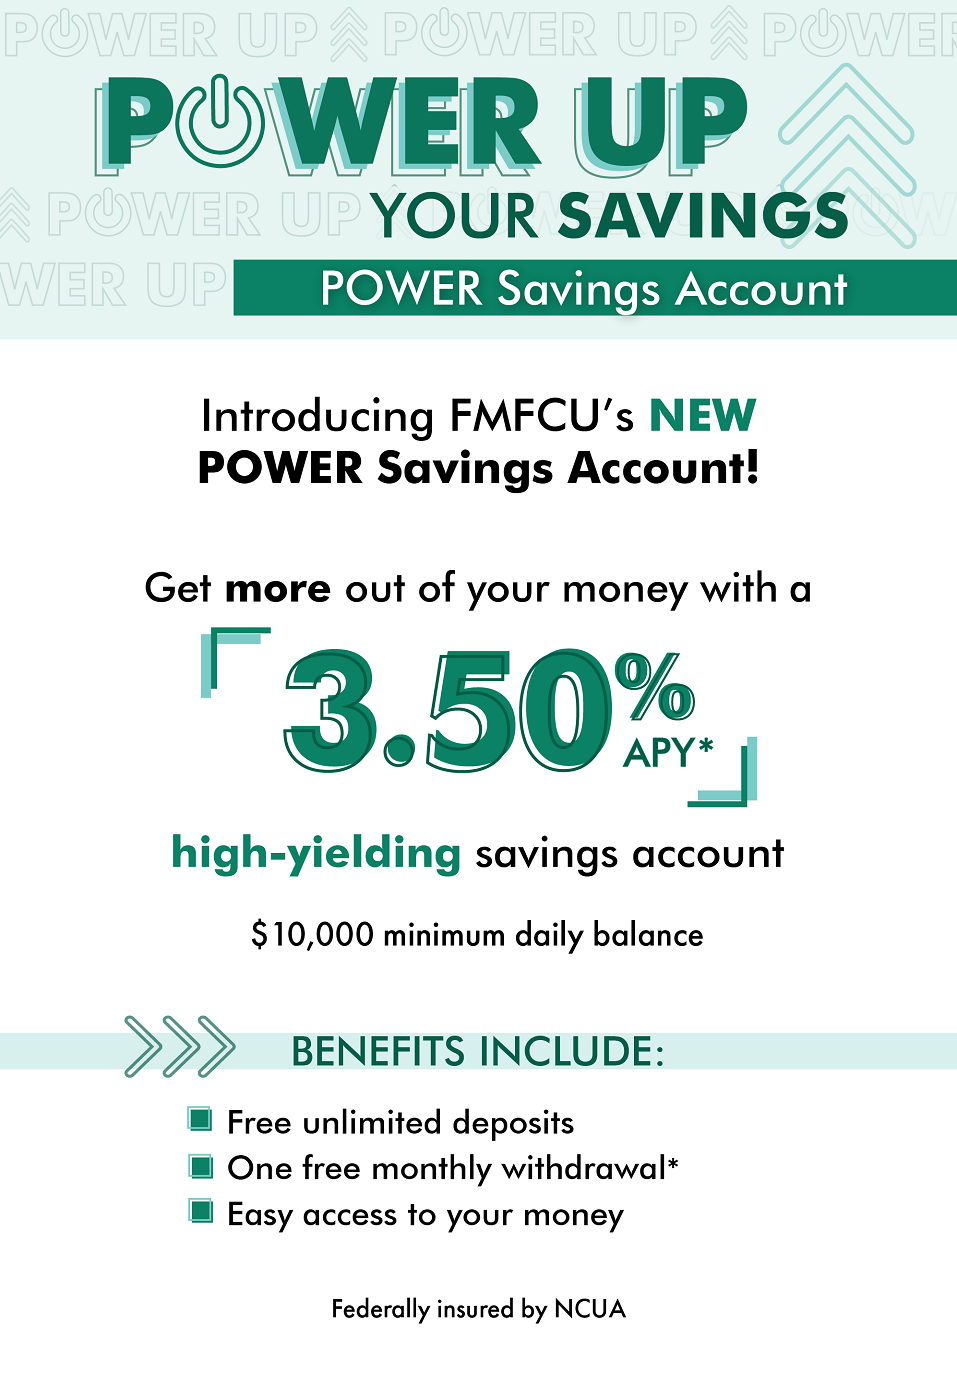 Power Up Your Savings with an FMFCU POWER Savings Account